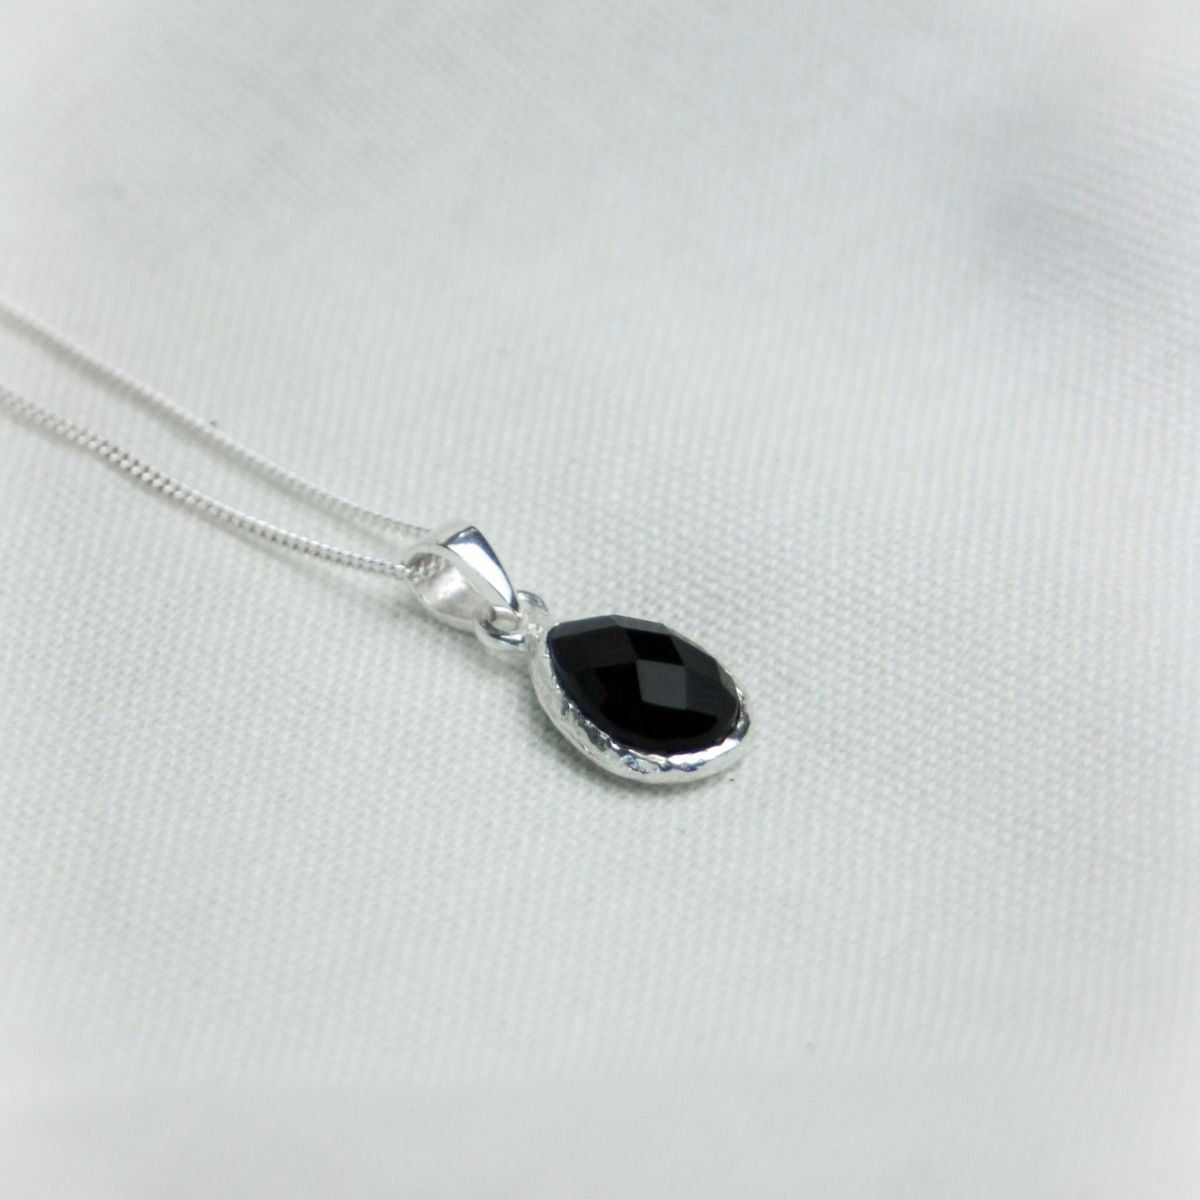 a black pendant necklace on a white sheet 